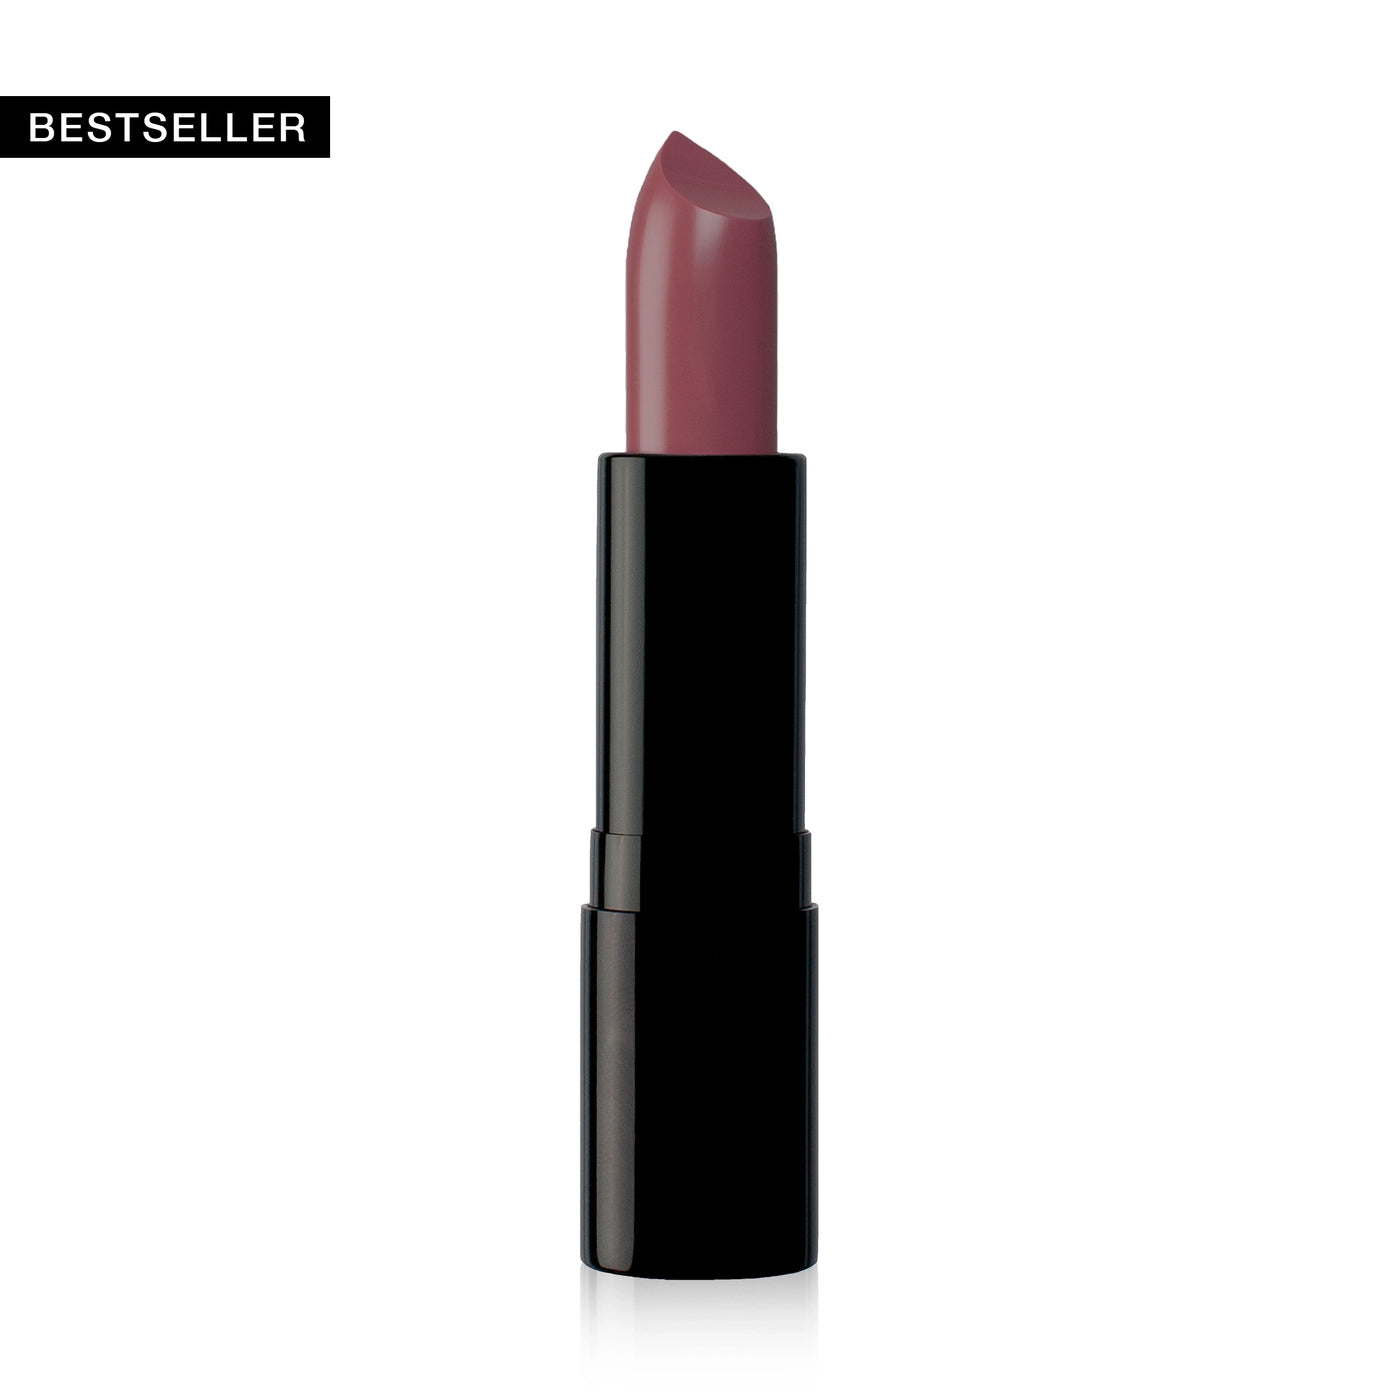 Day Dreamer - Luxury Balm Lipstick